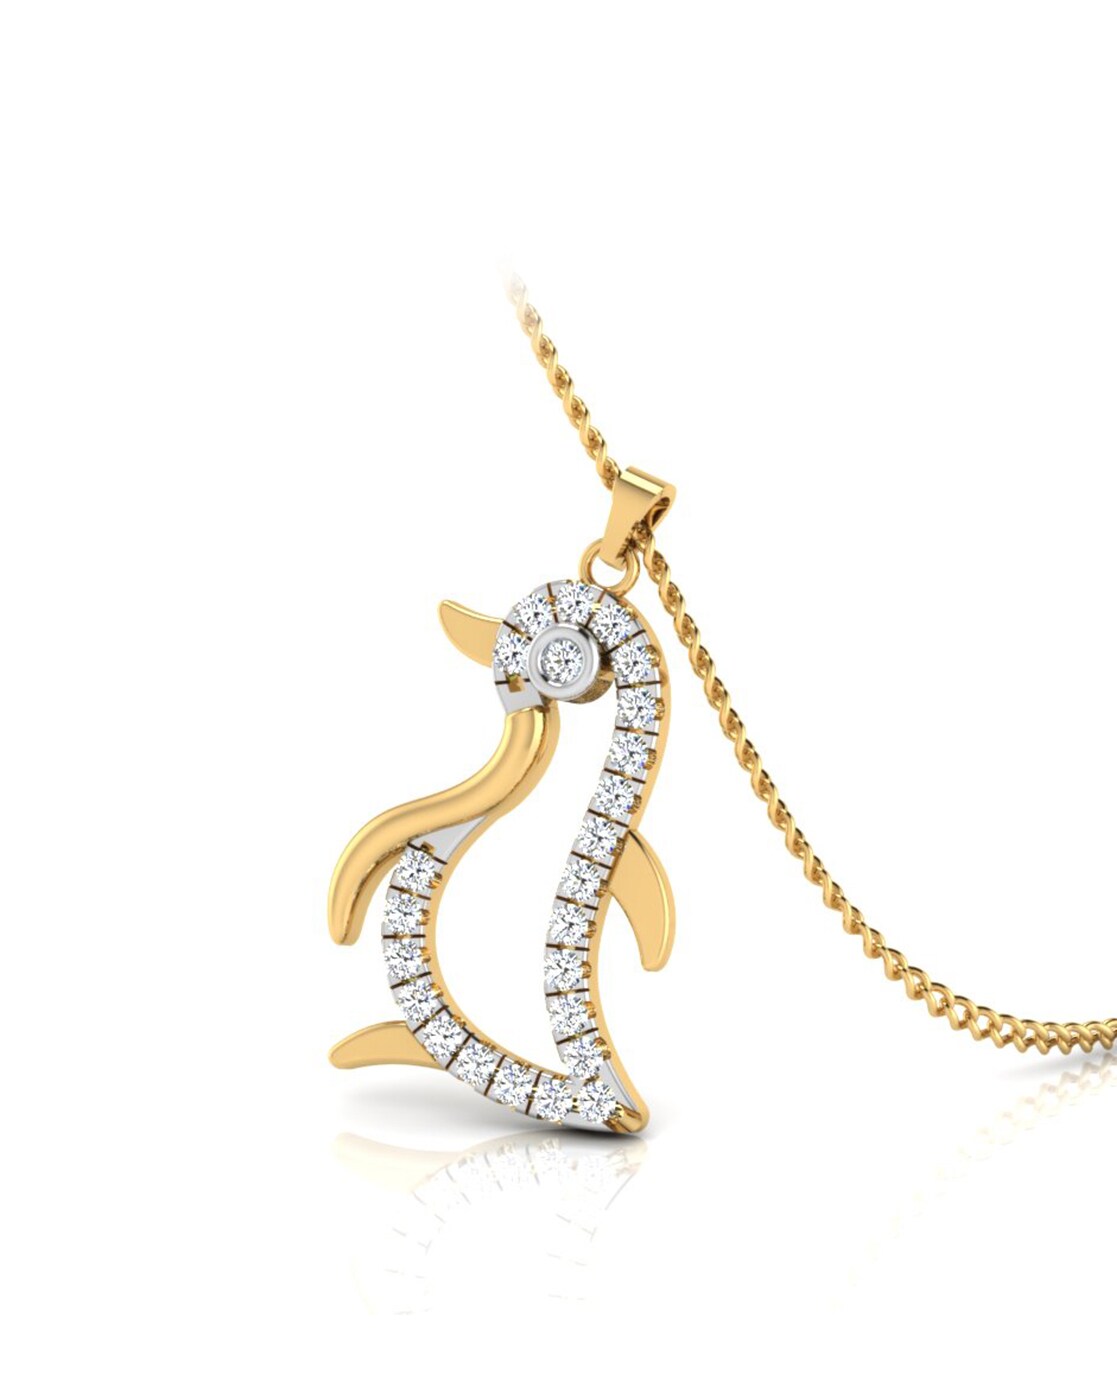 Animal Necklace Jewelry | Penguin Accessories | Penguins Necklace |  Swimming Necklace - Necklace - Aliexpress